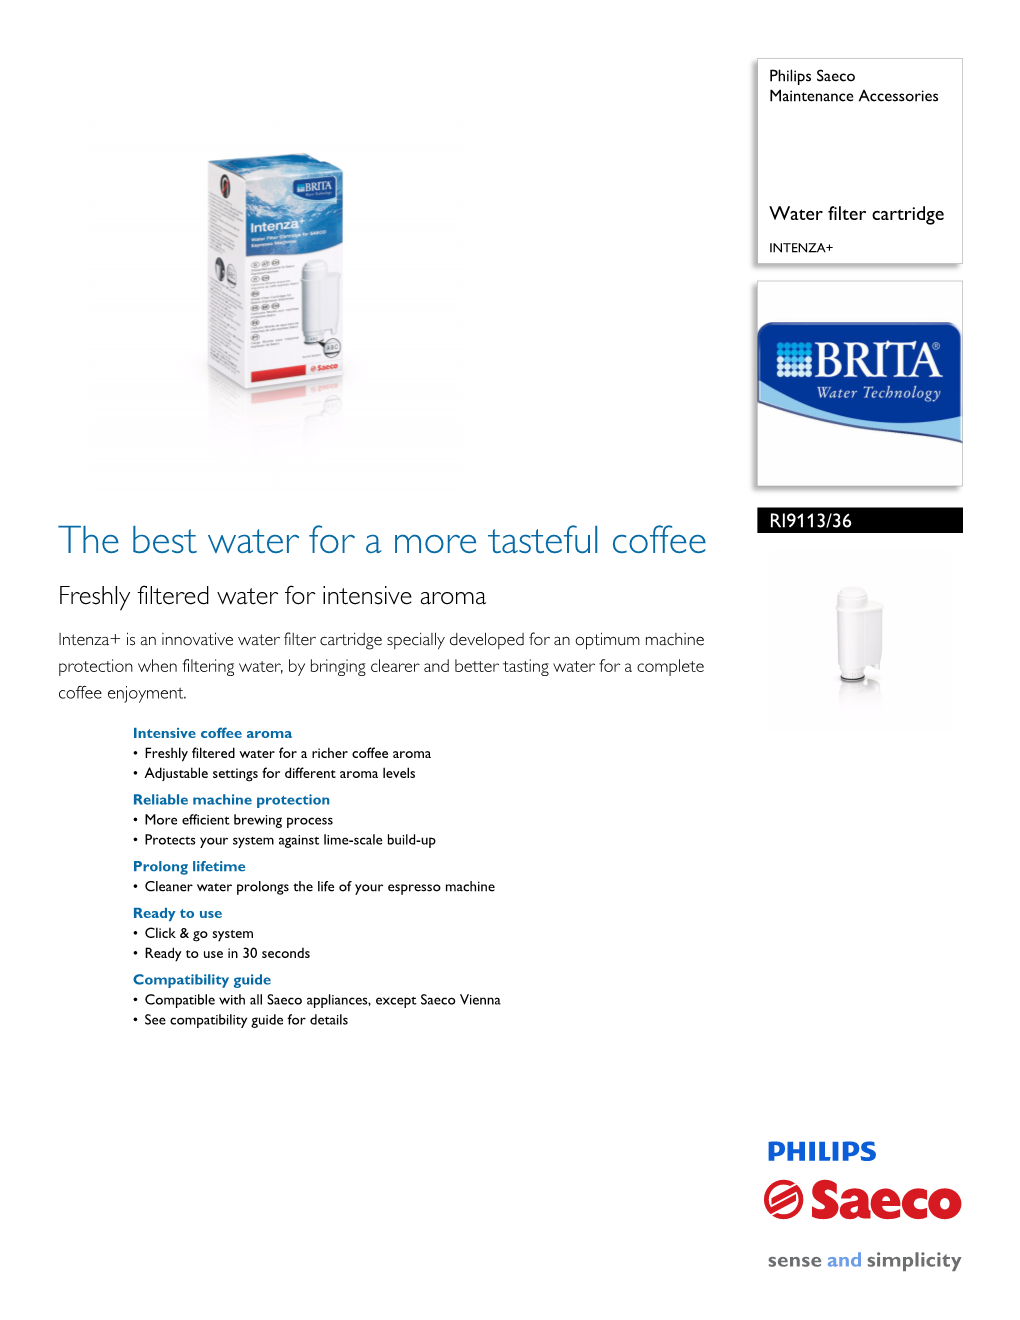 Saeco Intenza+ Water Filter Brochure